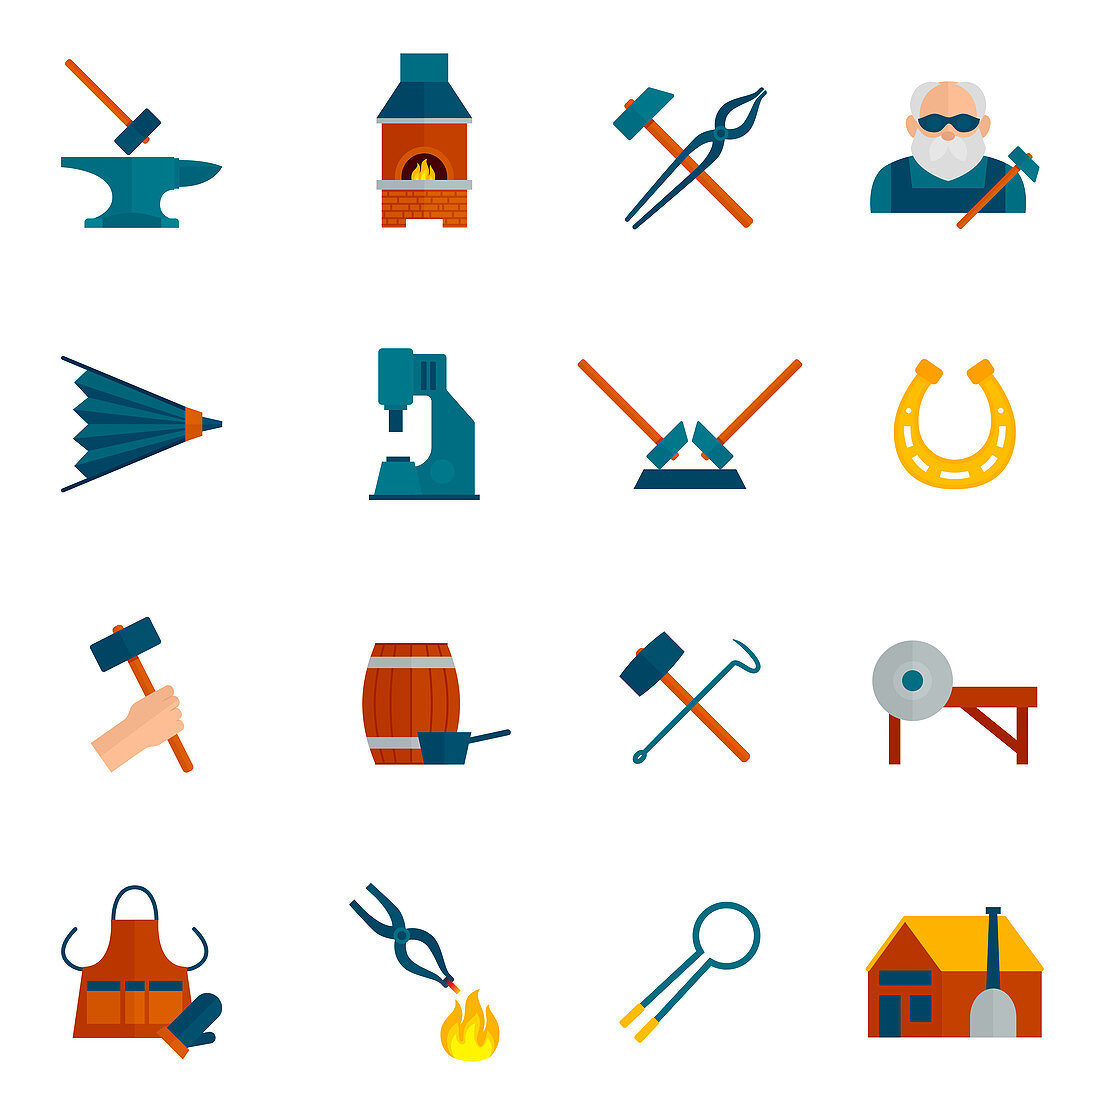 Blacksmith icons, illustration